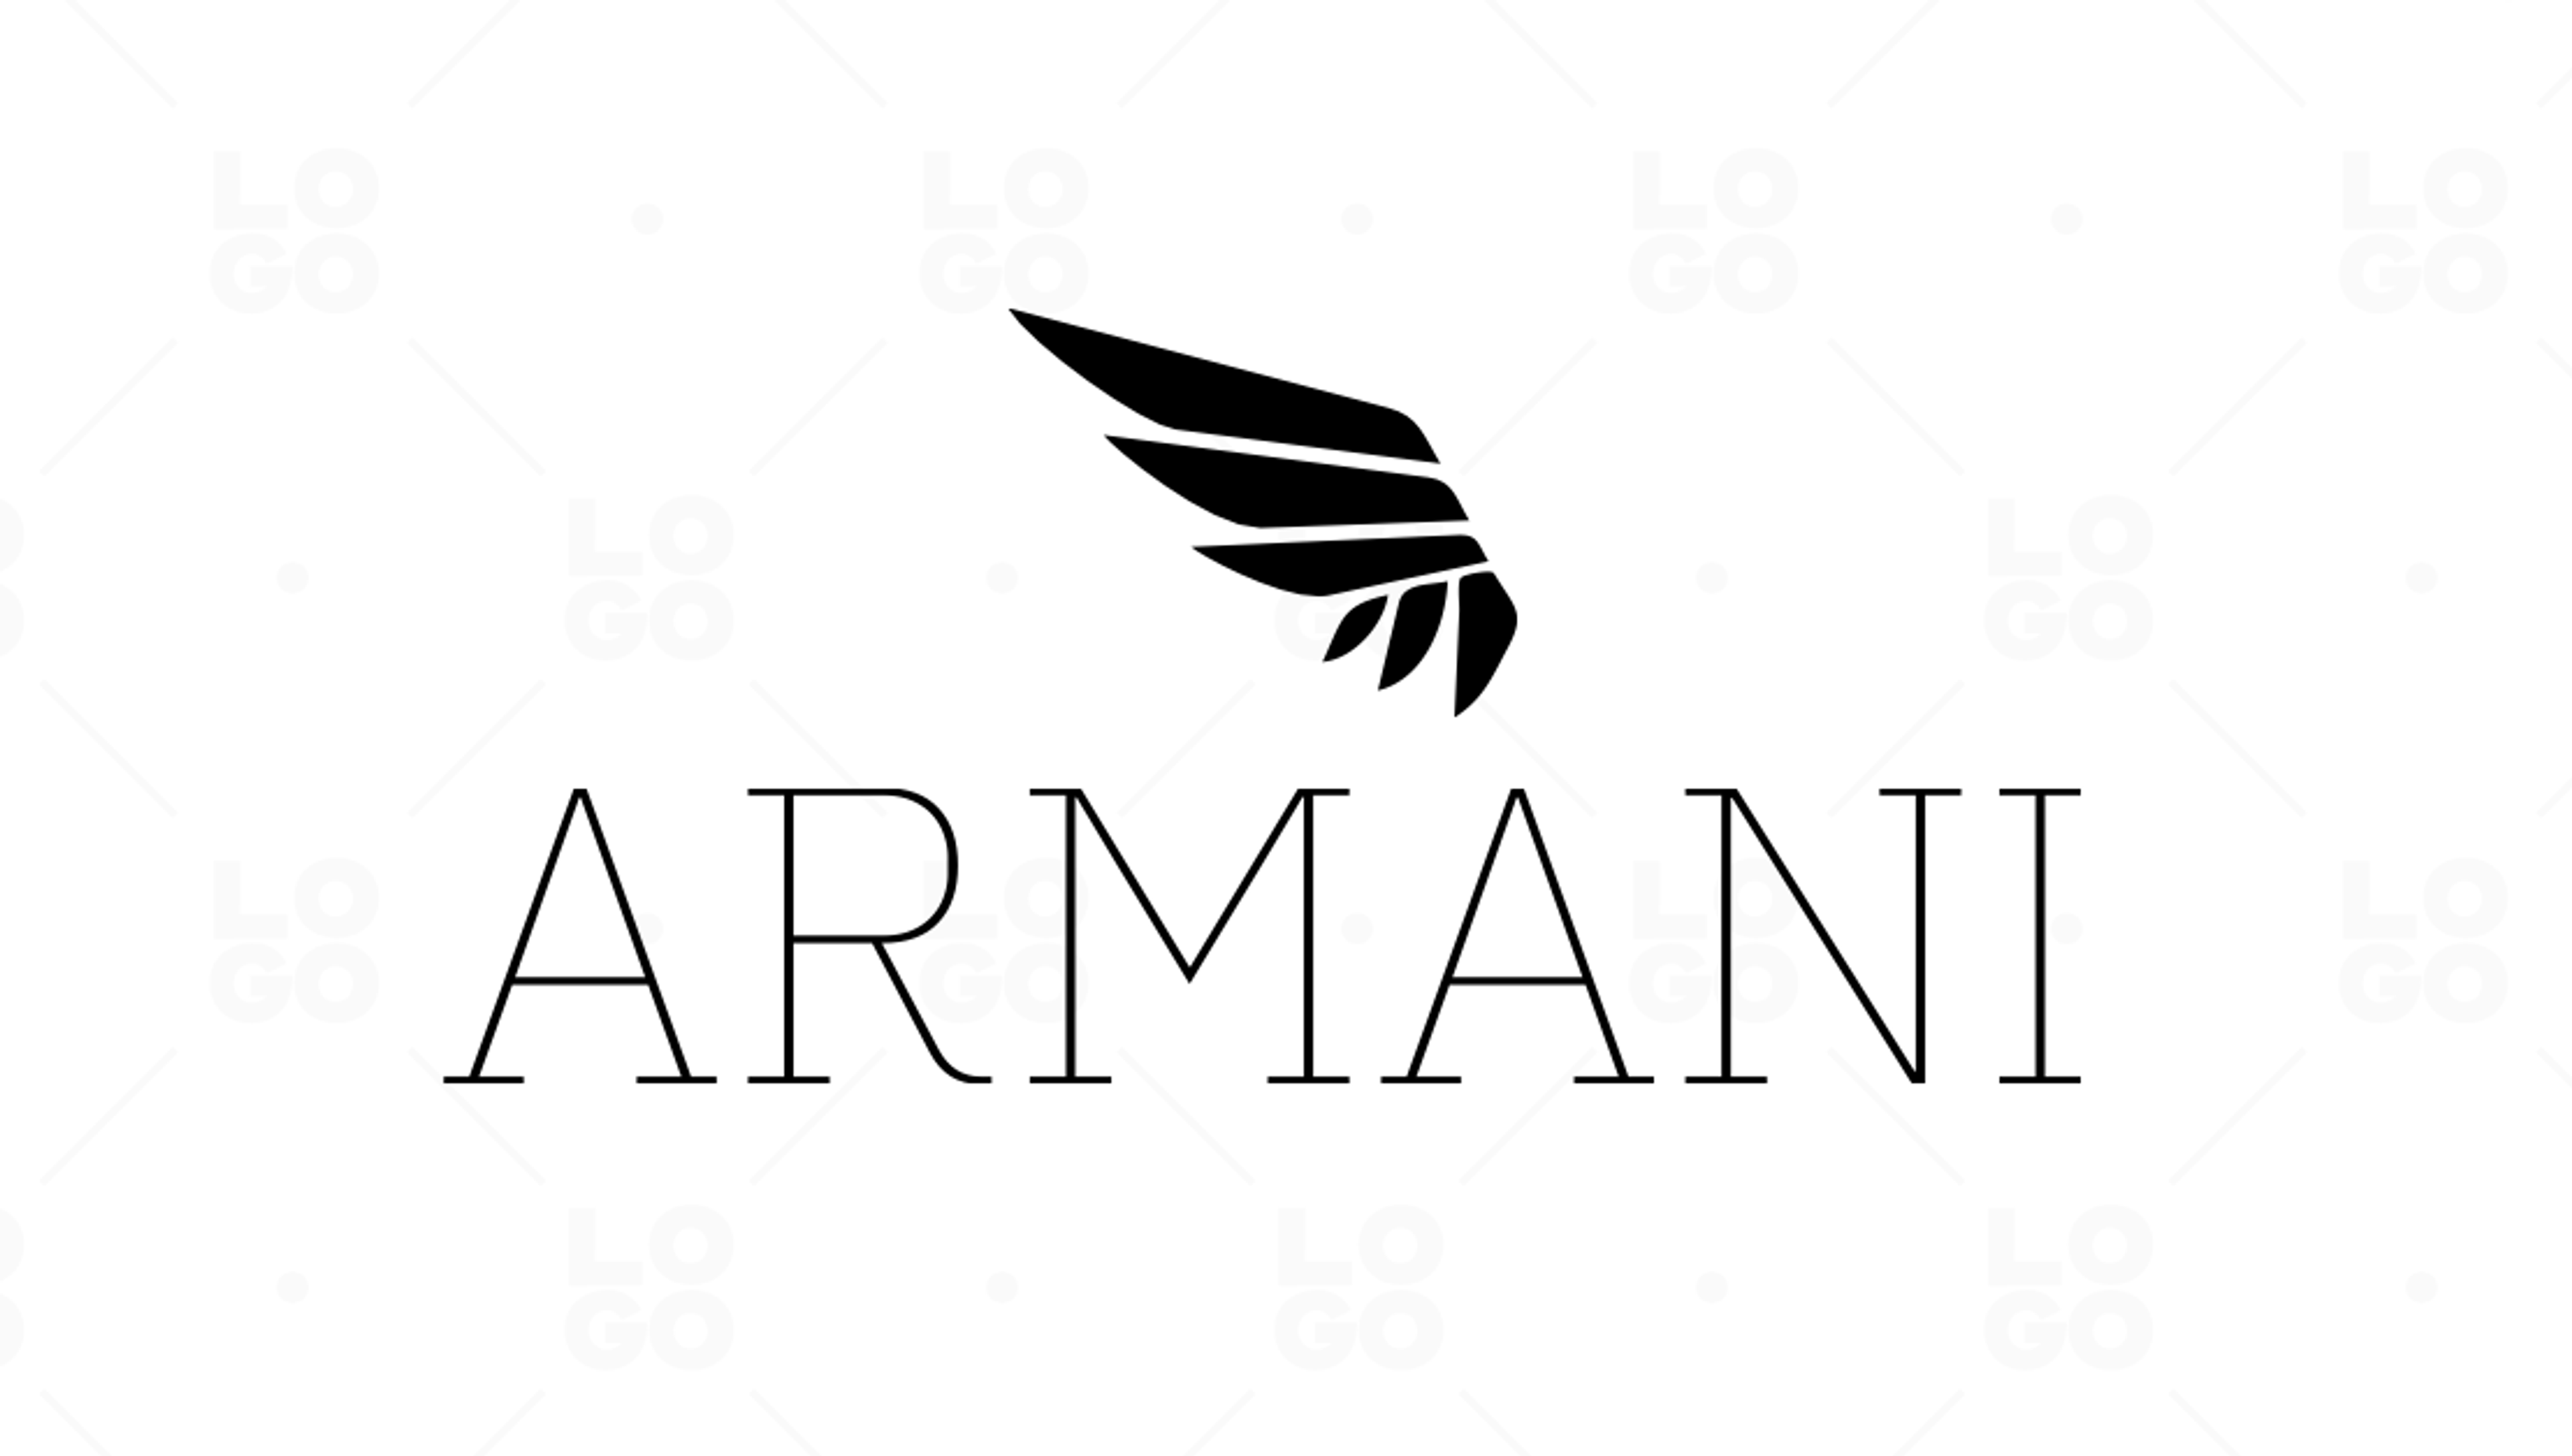 Armani logo variation